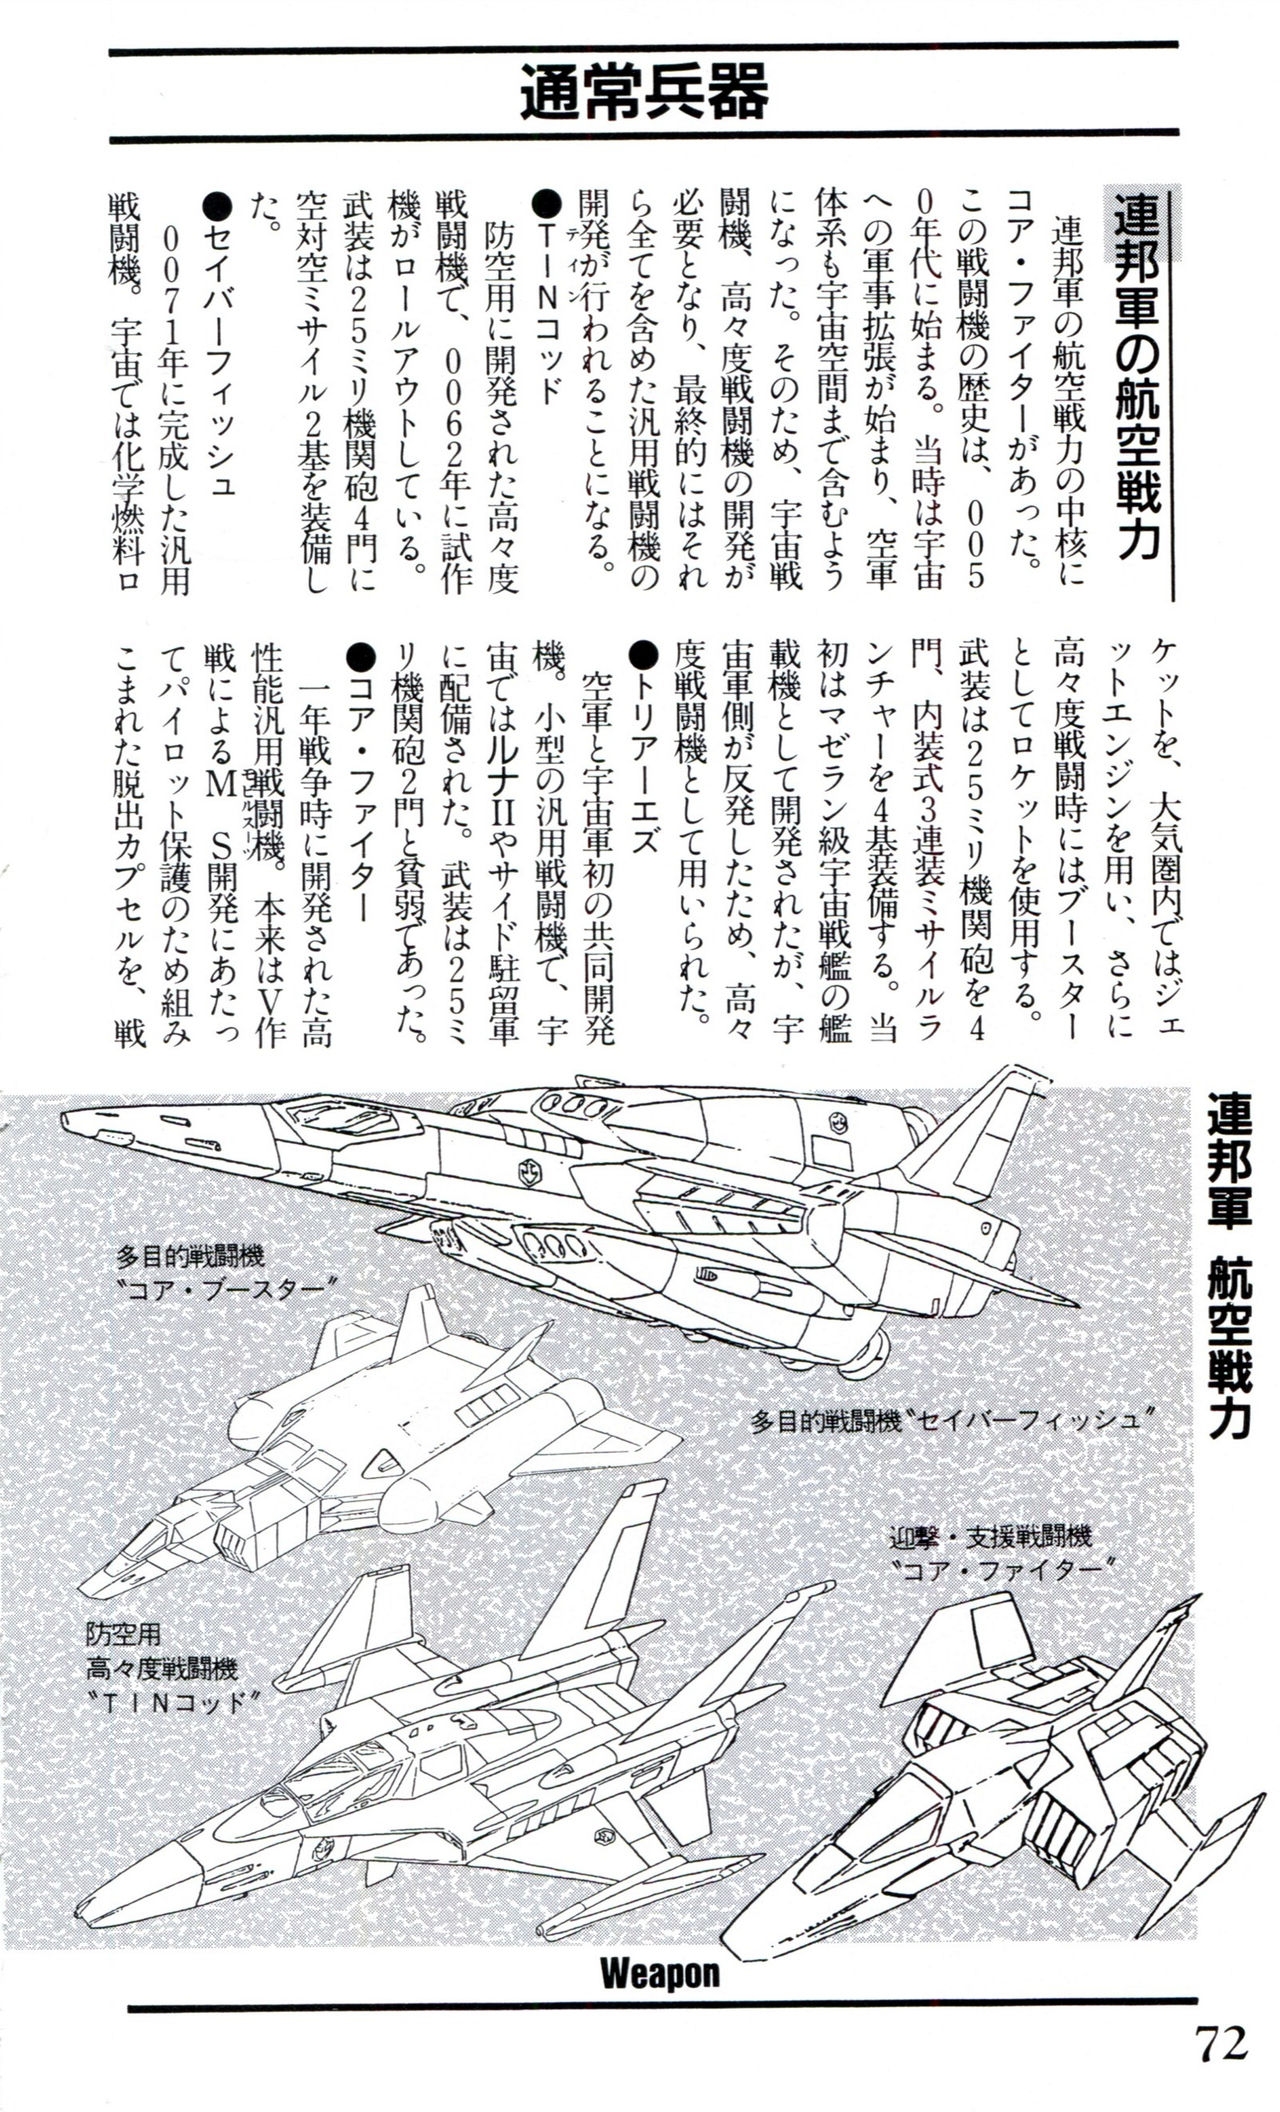 Mobile Suit Gundam U.C. Box MS Gundam Encyclopedia NO.01 - Mobile Suit Gundam 71